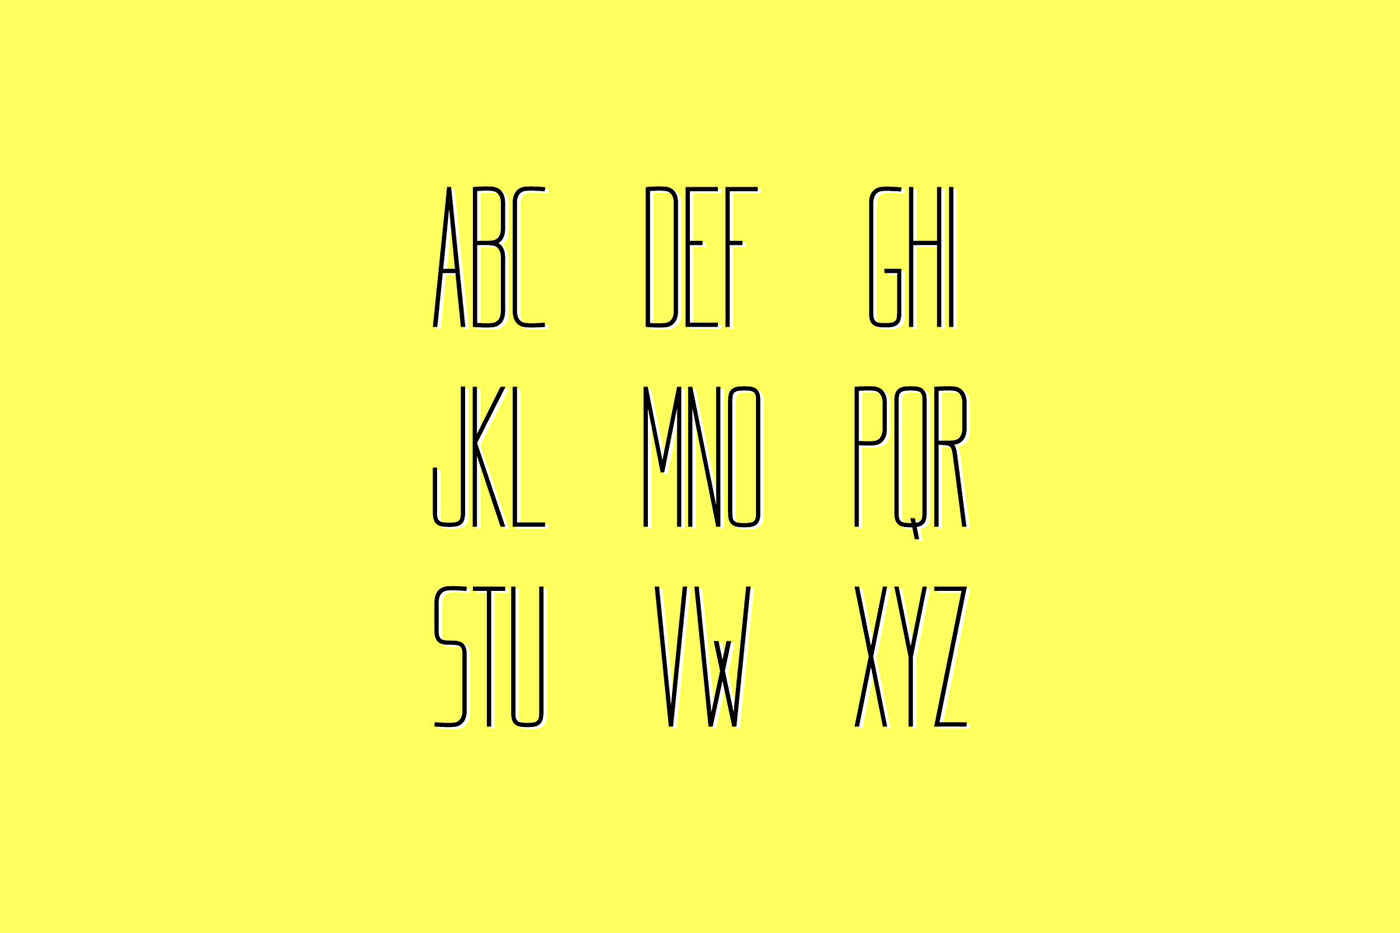 typography   Title compact Kømpakt free font